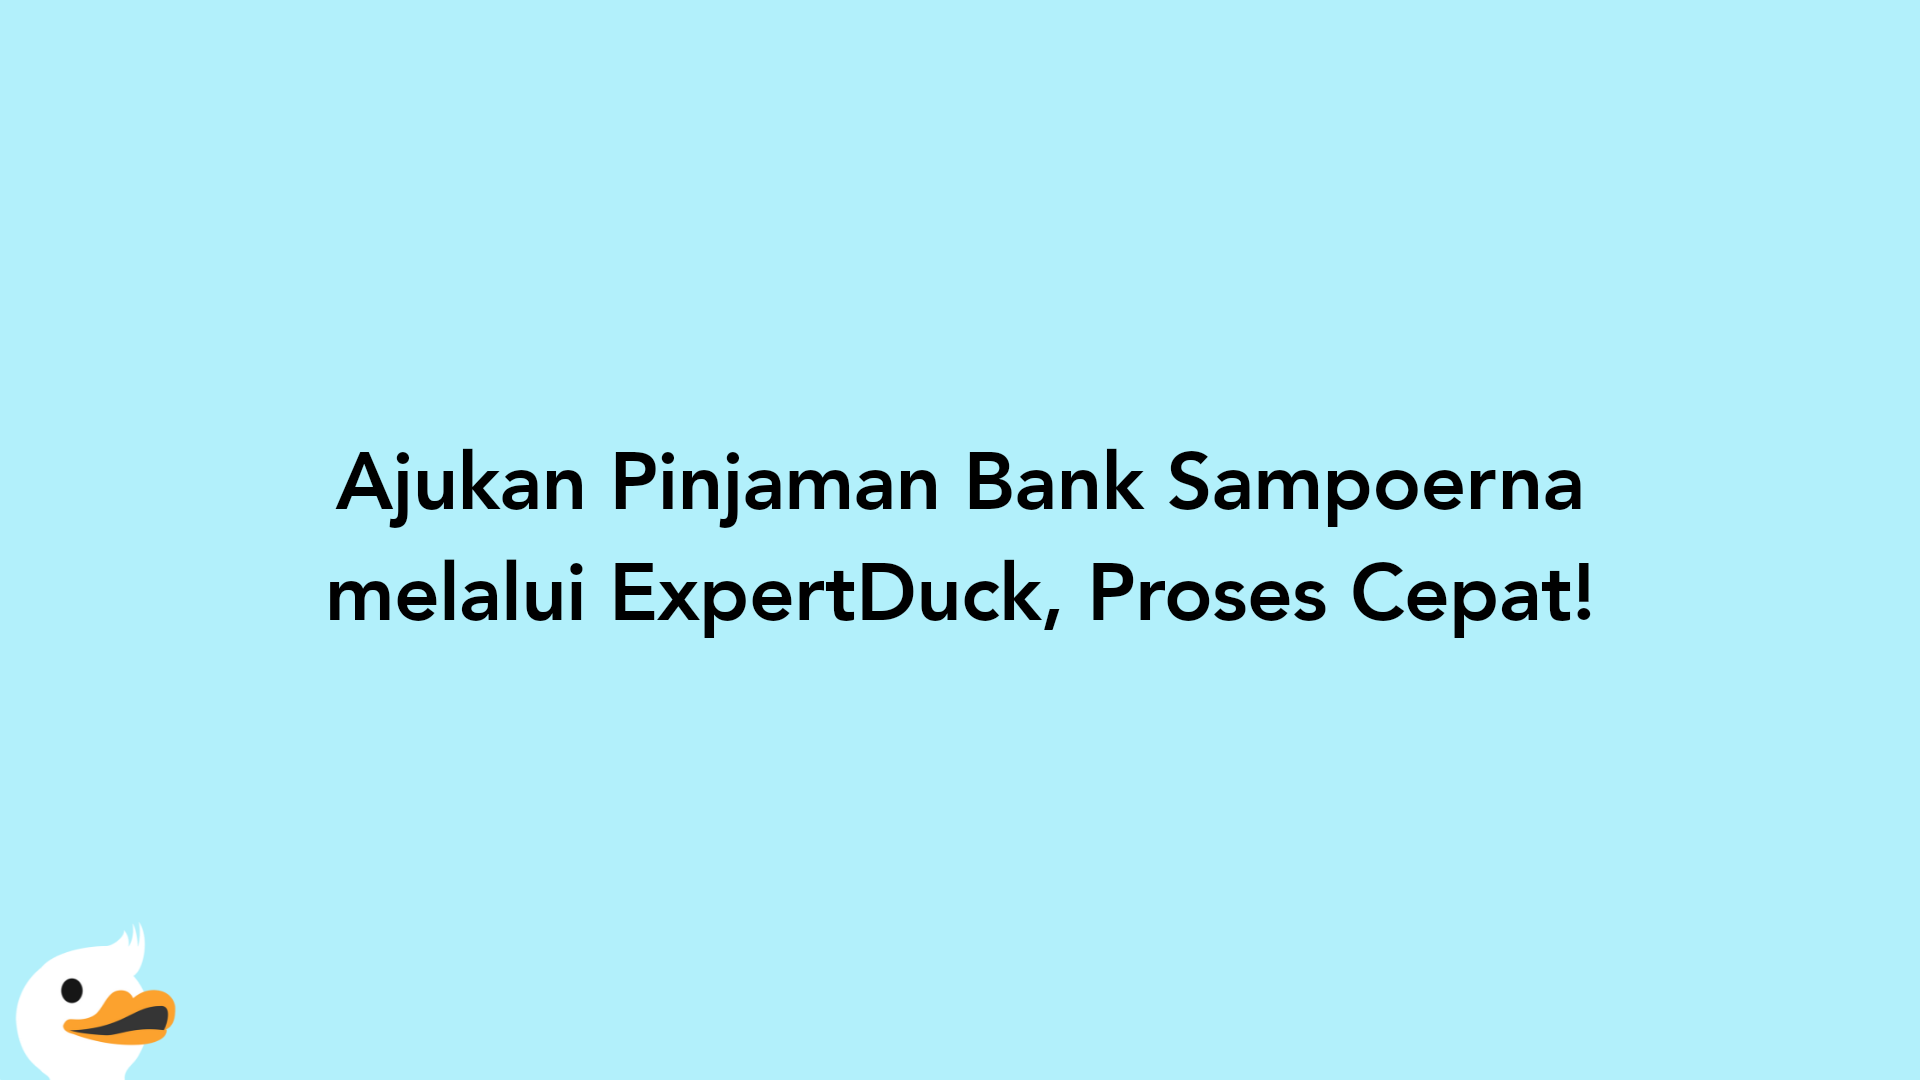 Ajukan Pinjaman Bank Sampoerna melalui ExpertDuck, Proses Cepat!